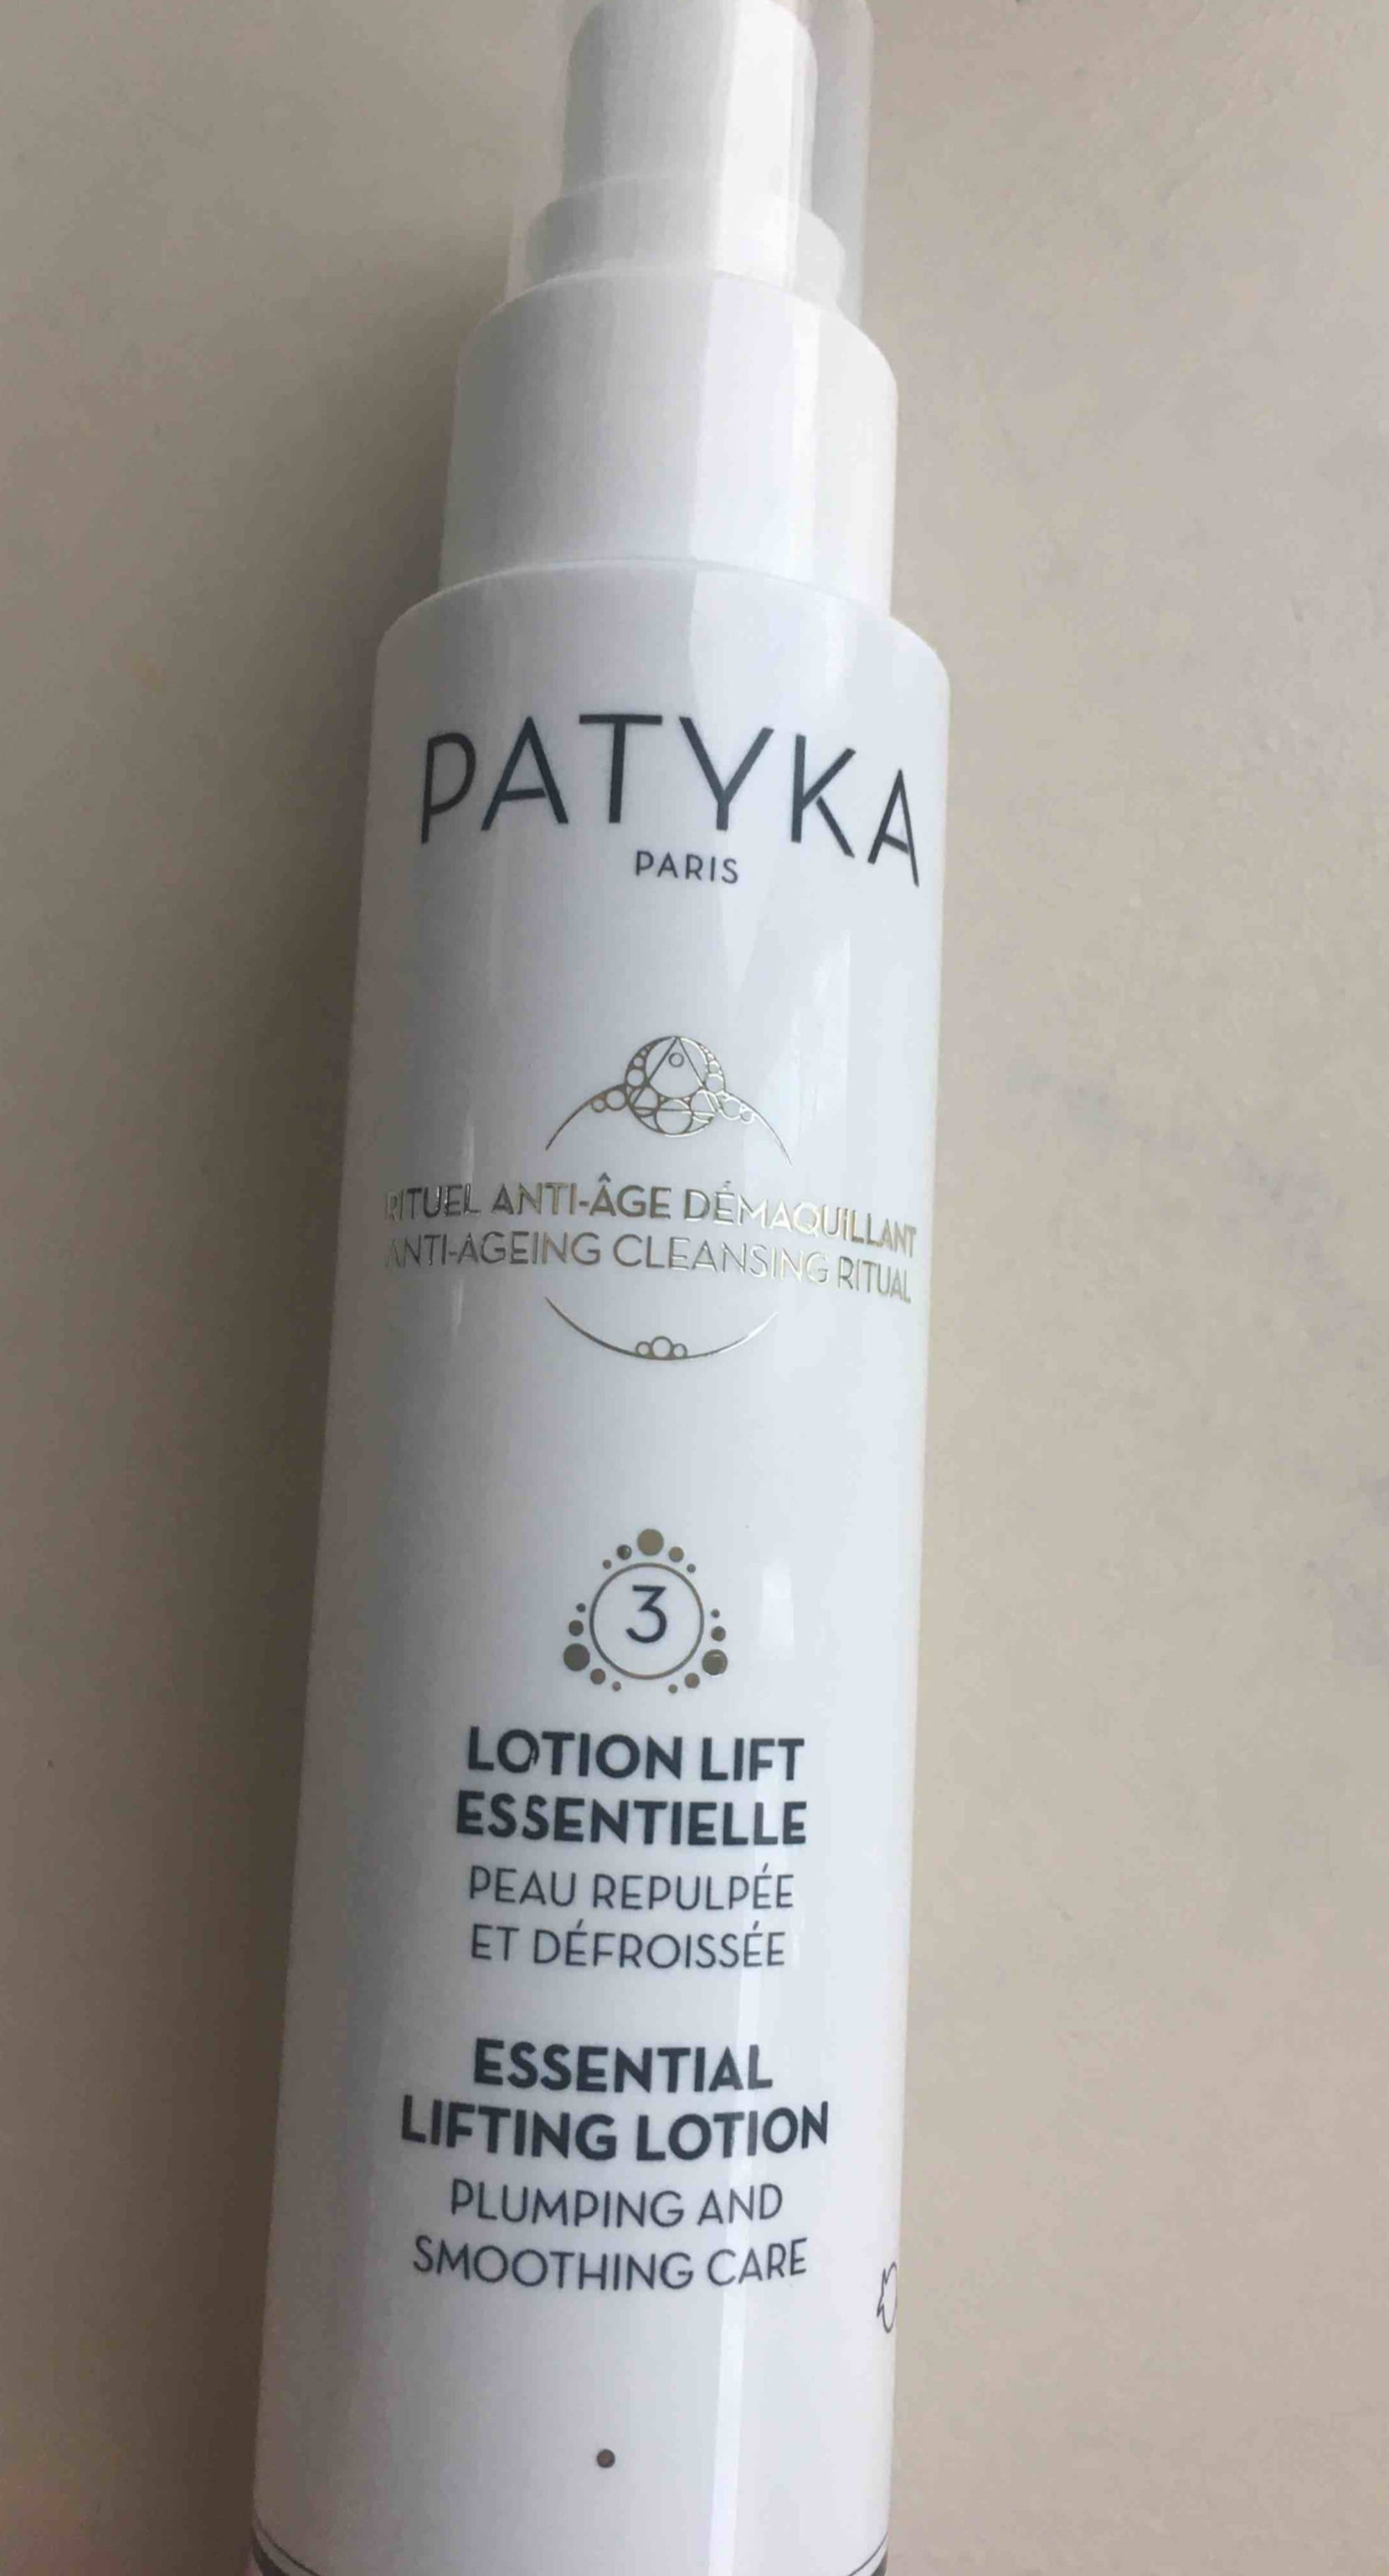 PATYKA - Lotion lift essentielle - Rituel anti-âge démaquillant